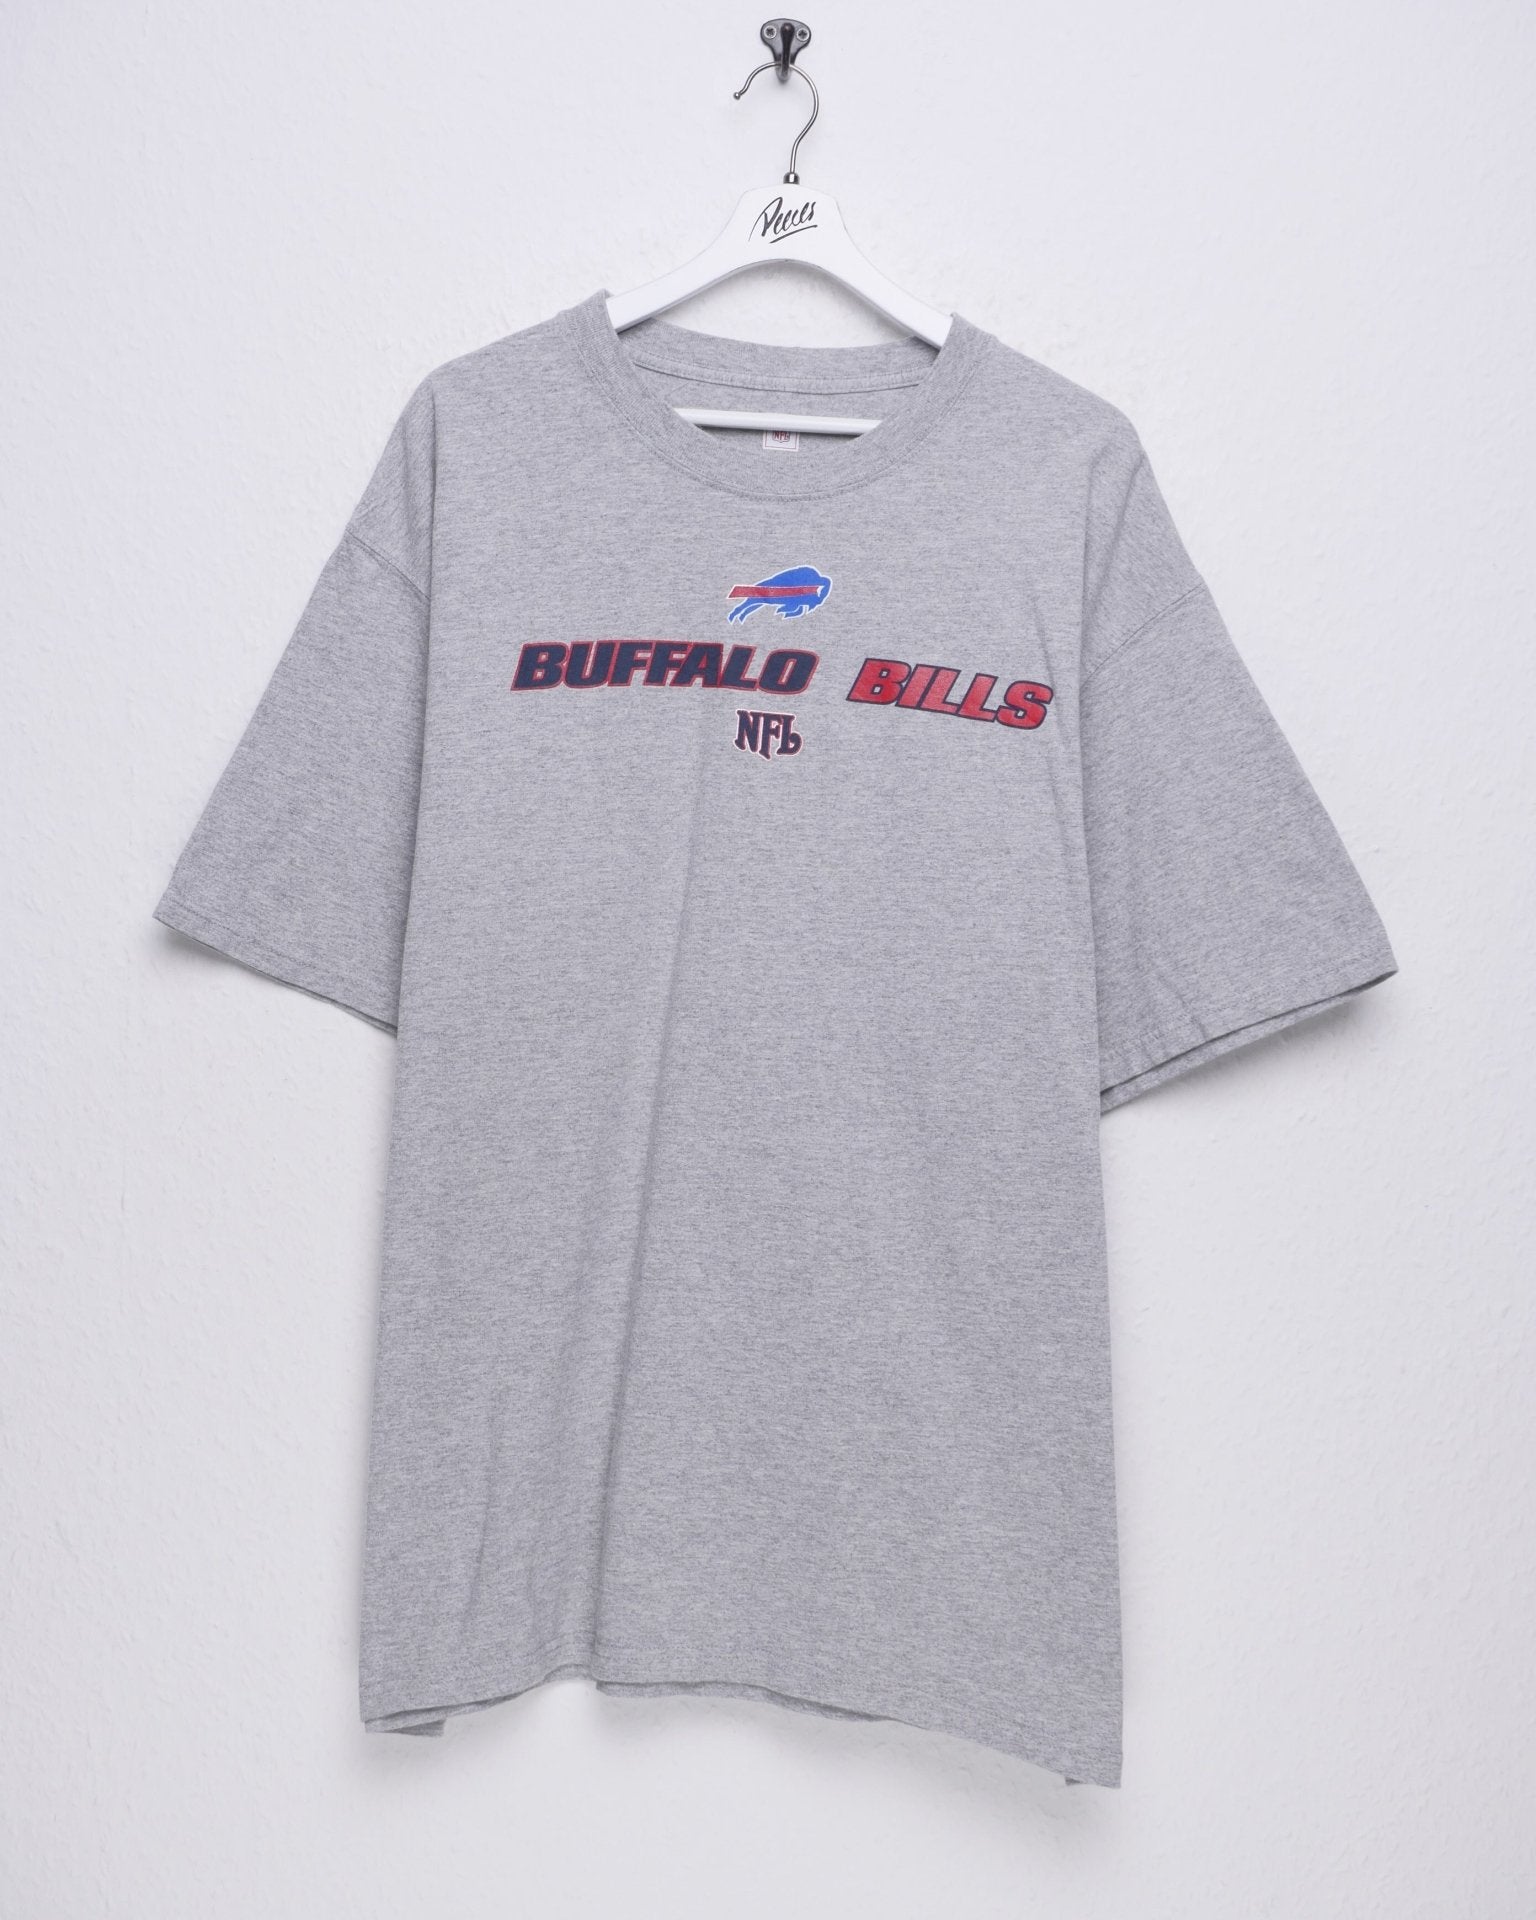 NFL printed Buffalo Bills Spellout Vintage Shirt - Peeces